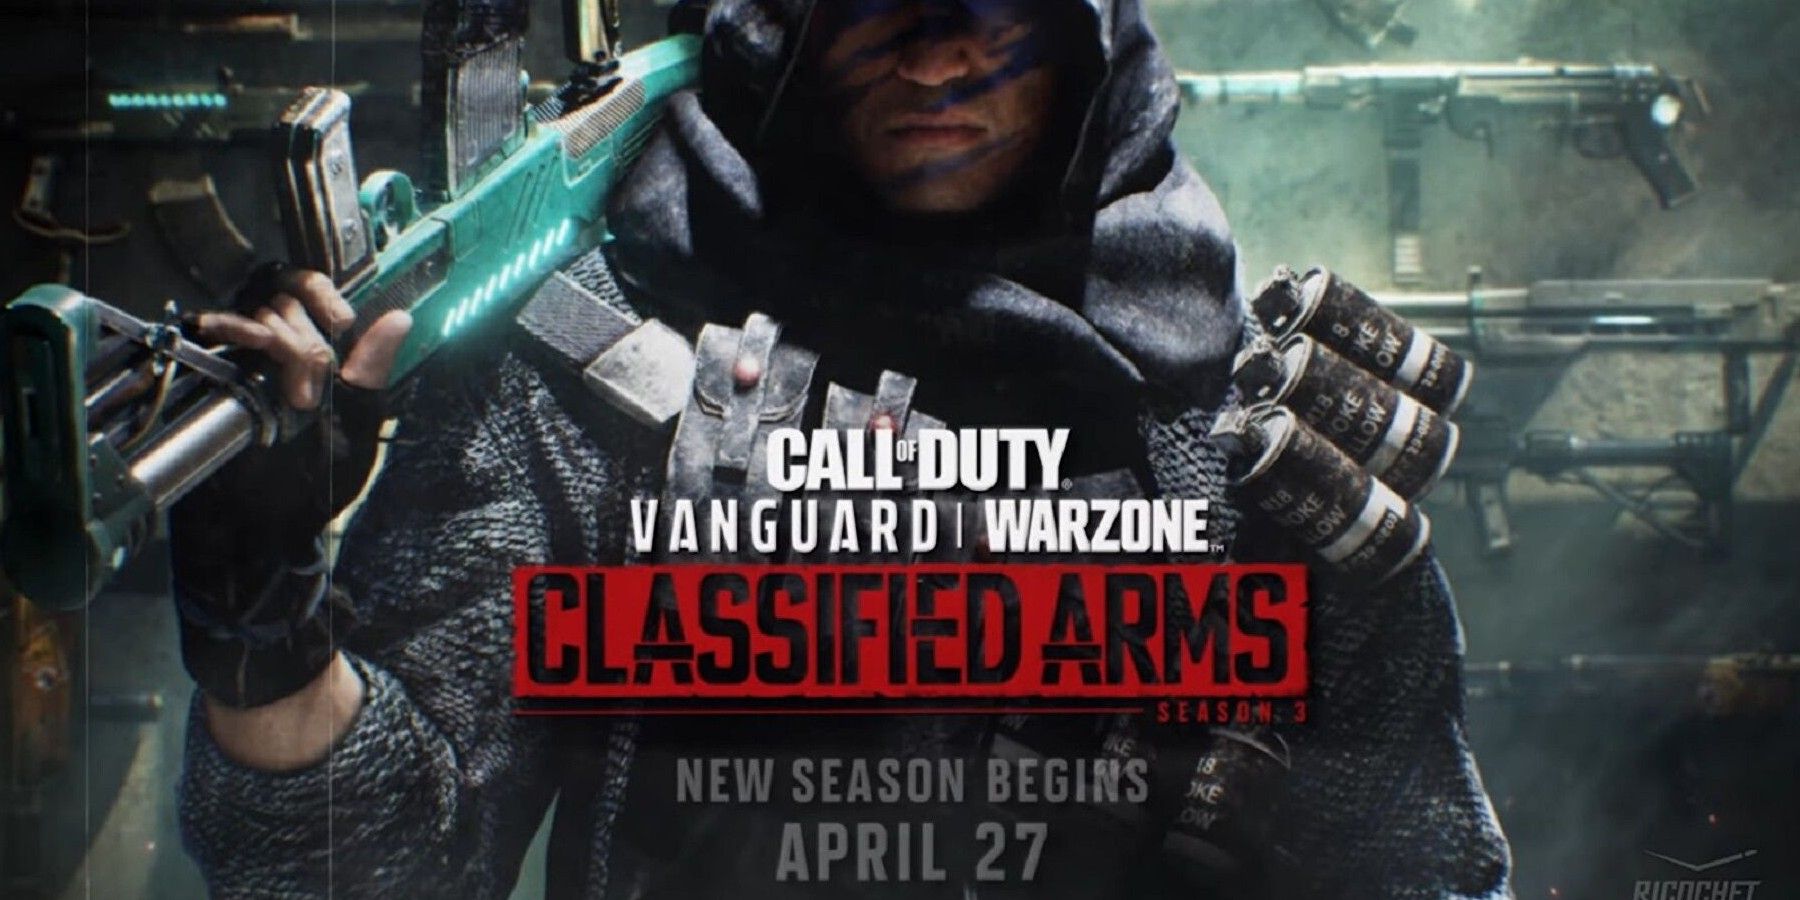 Call of Duty Classified Arms Season 3